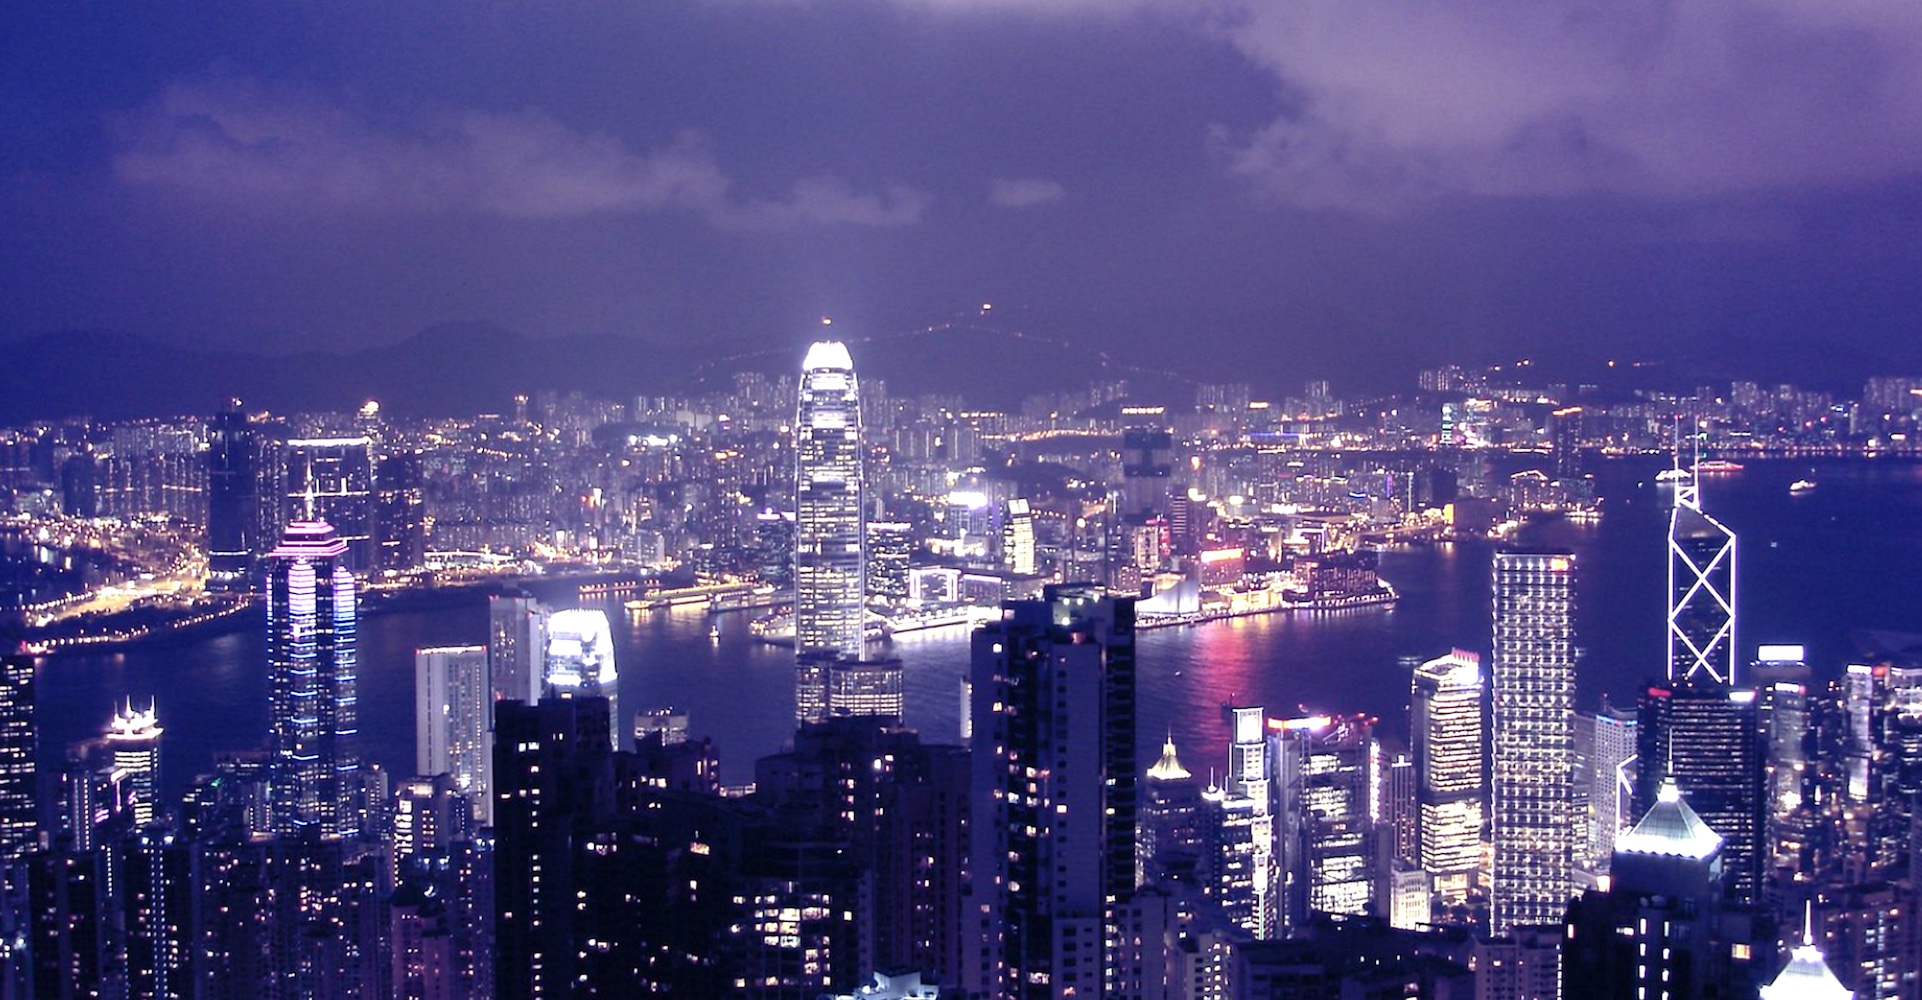 HGC環電為中央廣播電視總台提供一站式網絡連接方案 支援全球直播香港回歸25周年慶祝活動